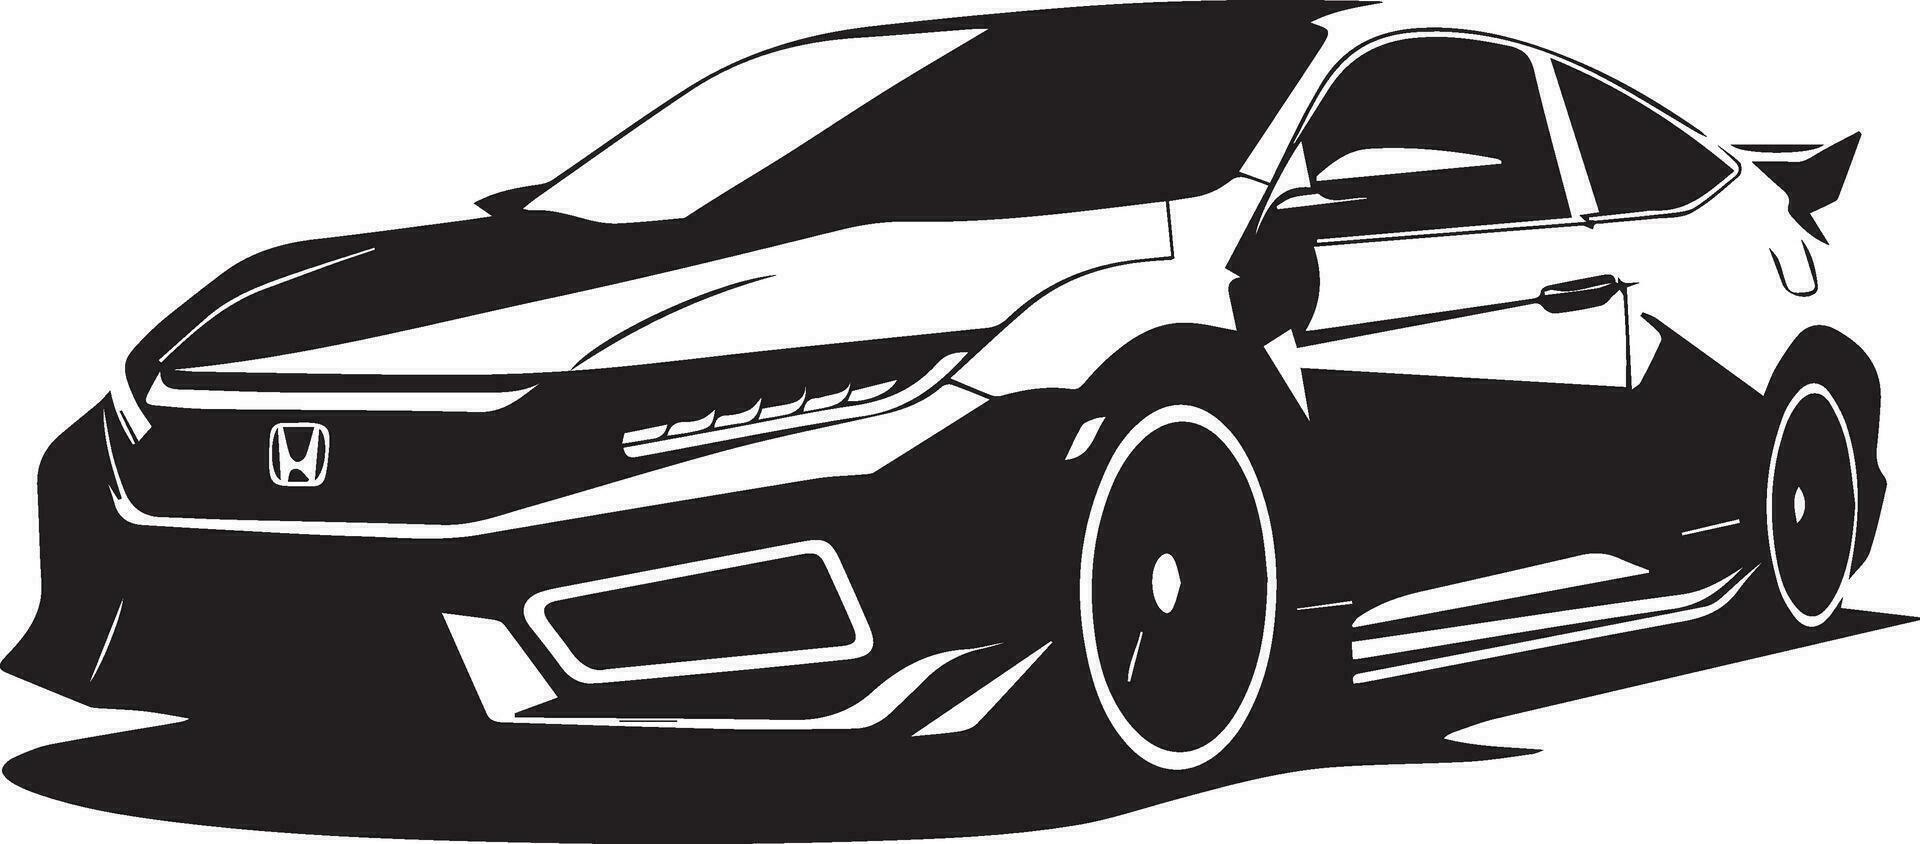 Car vector silhouette illustration black color